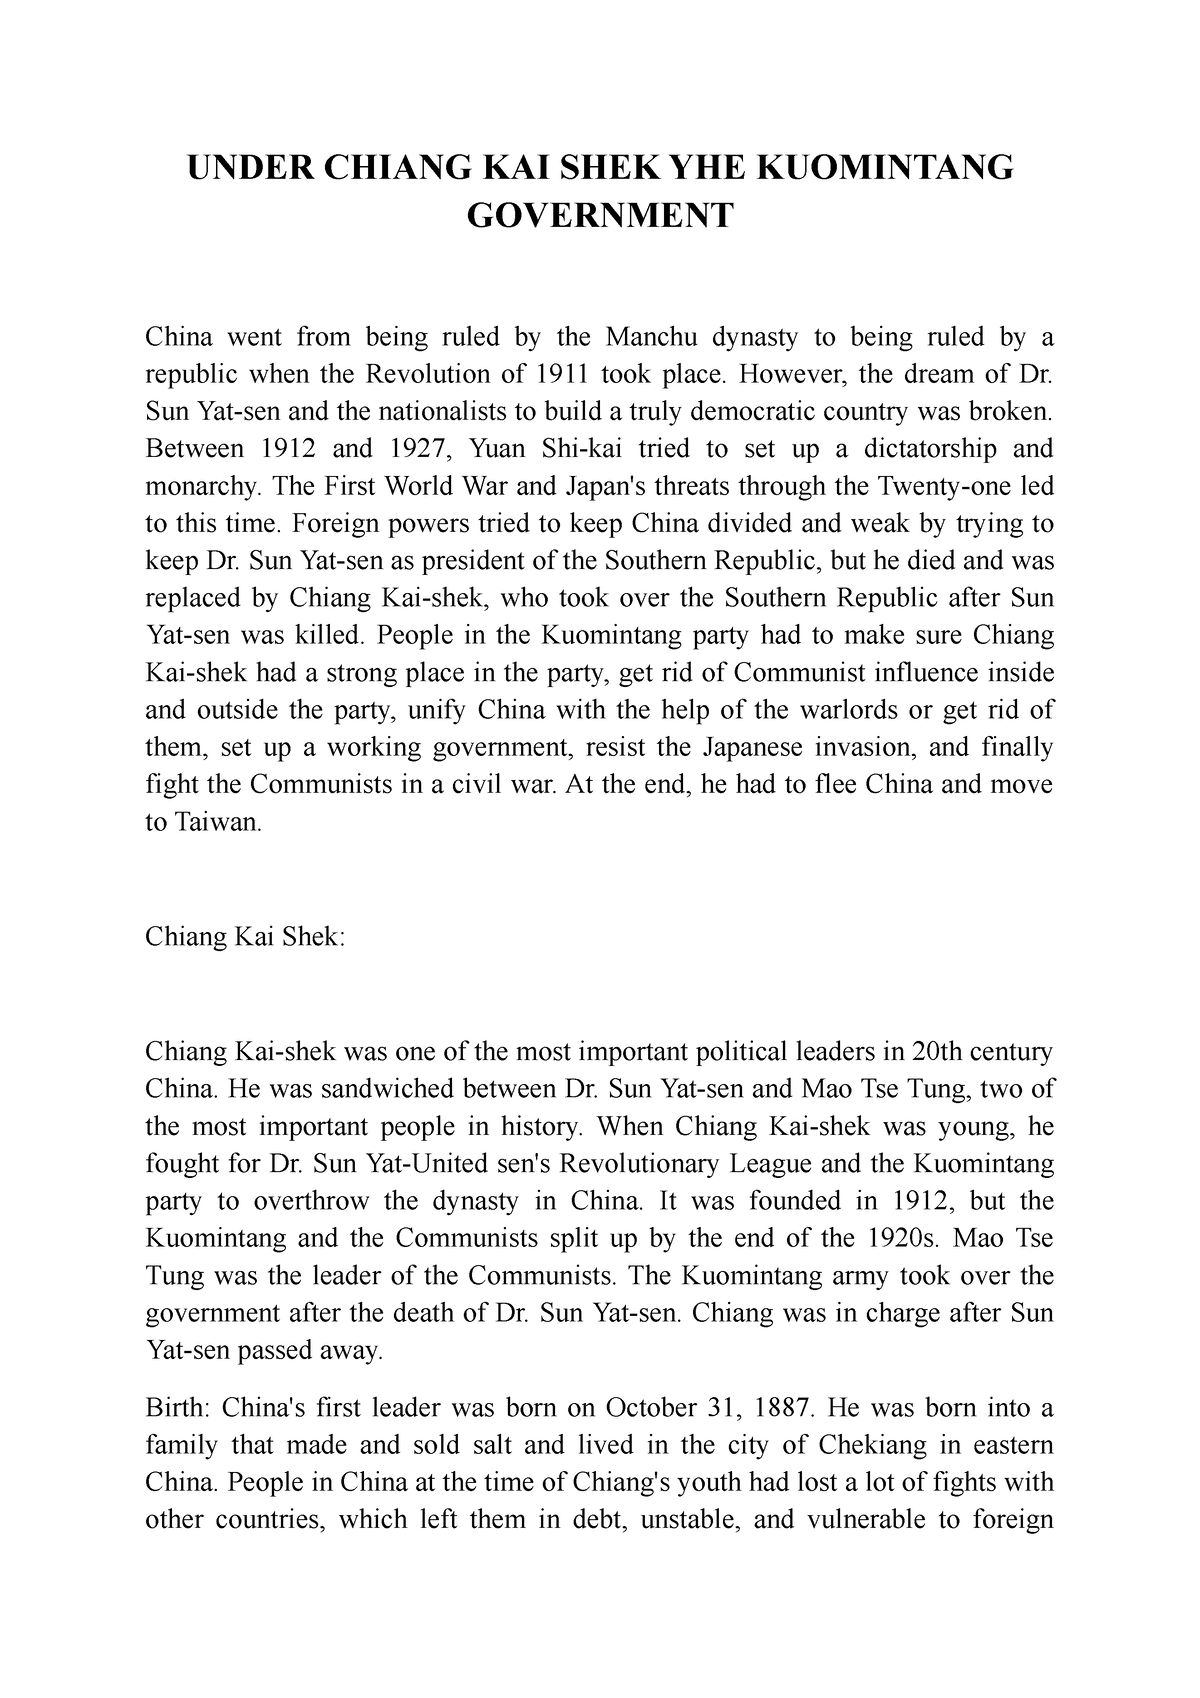 Under Chiang KAI SHEK the Kuomintang Government - UNDER CHIANG KAI SHEK ...